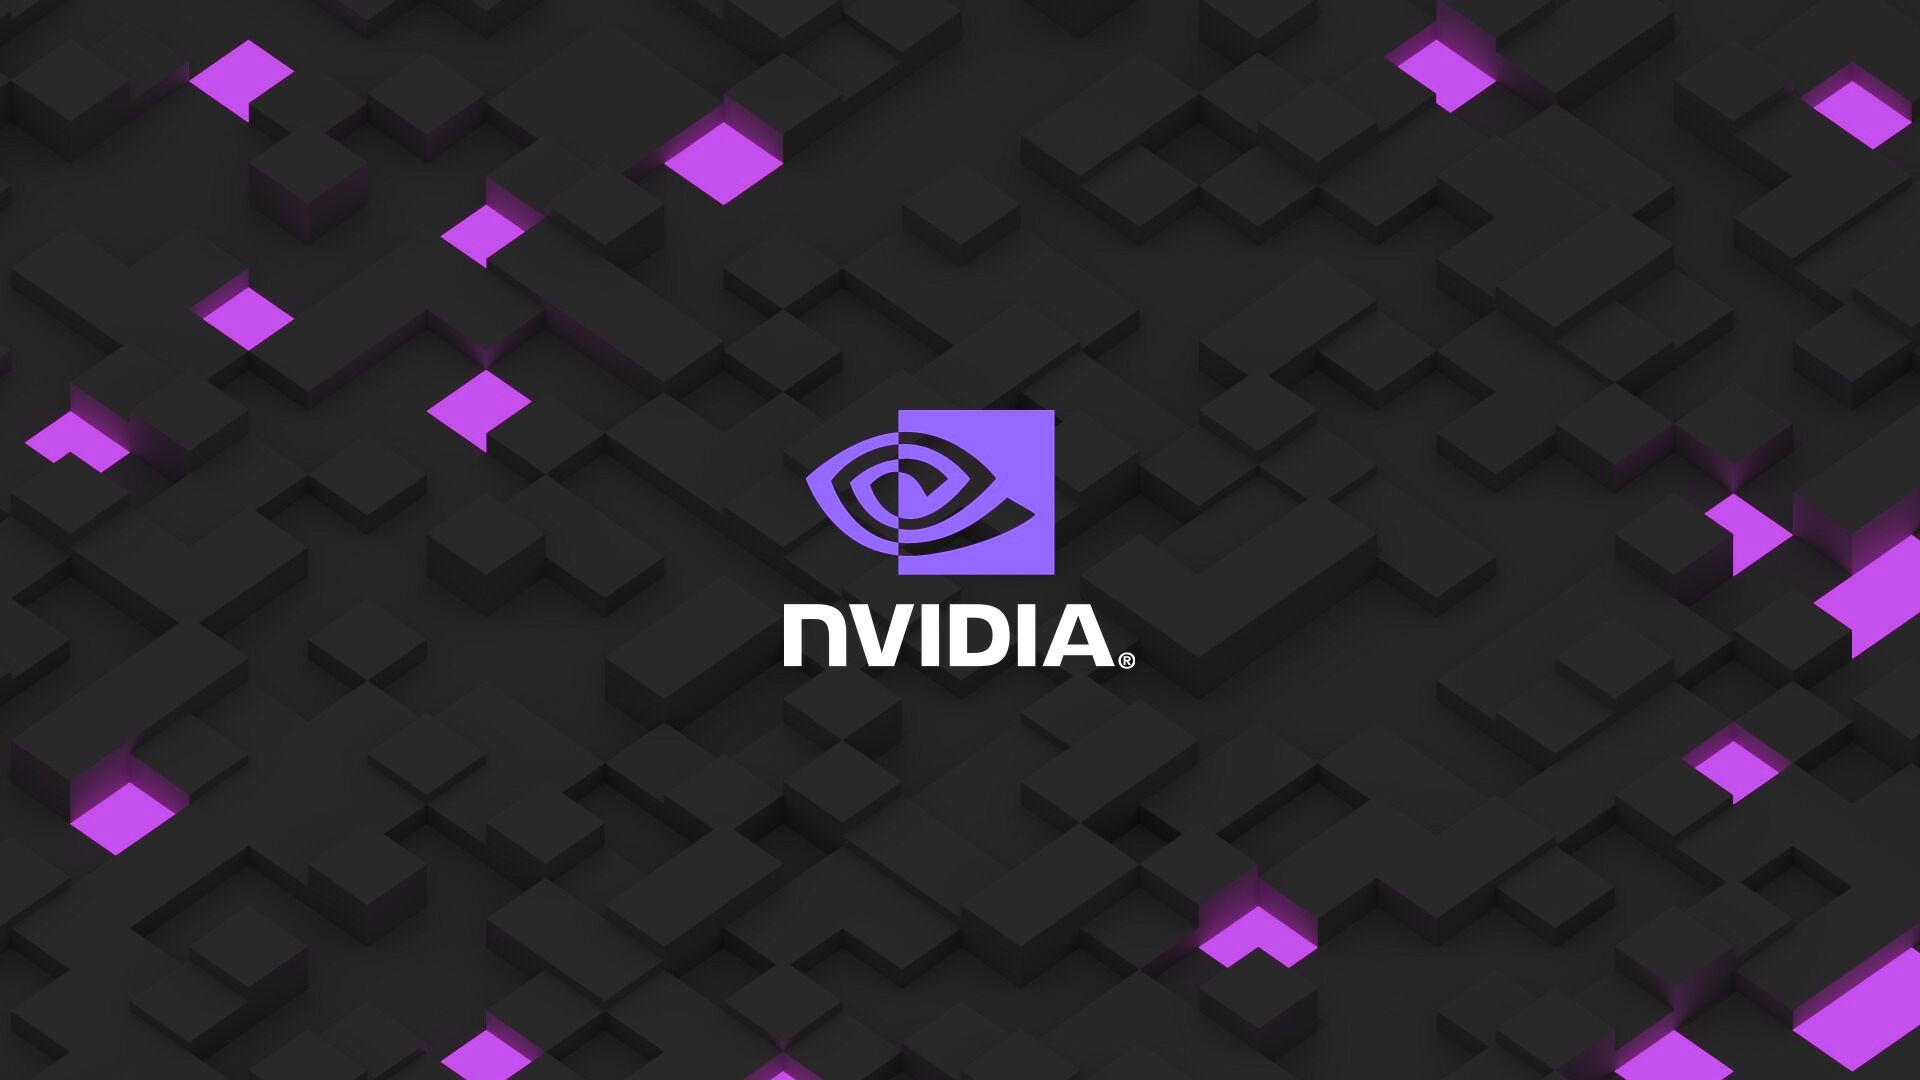 General 1920x1080 Nvidia technology logo text 3D blocks texture purple black